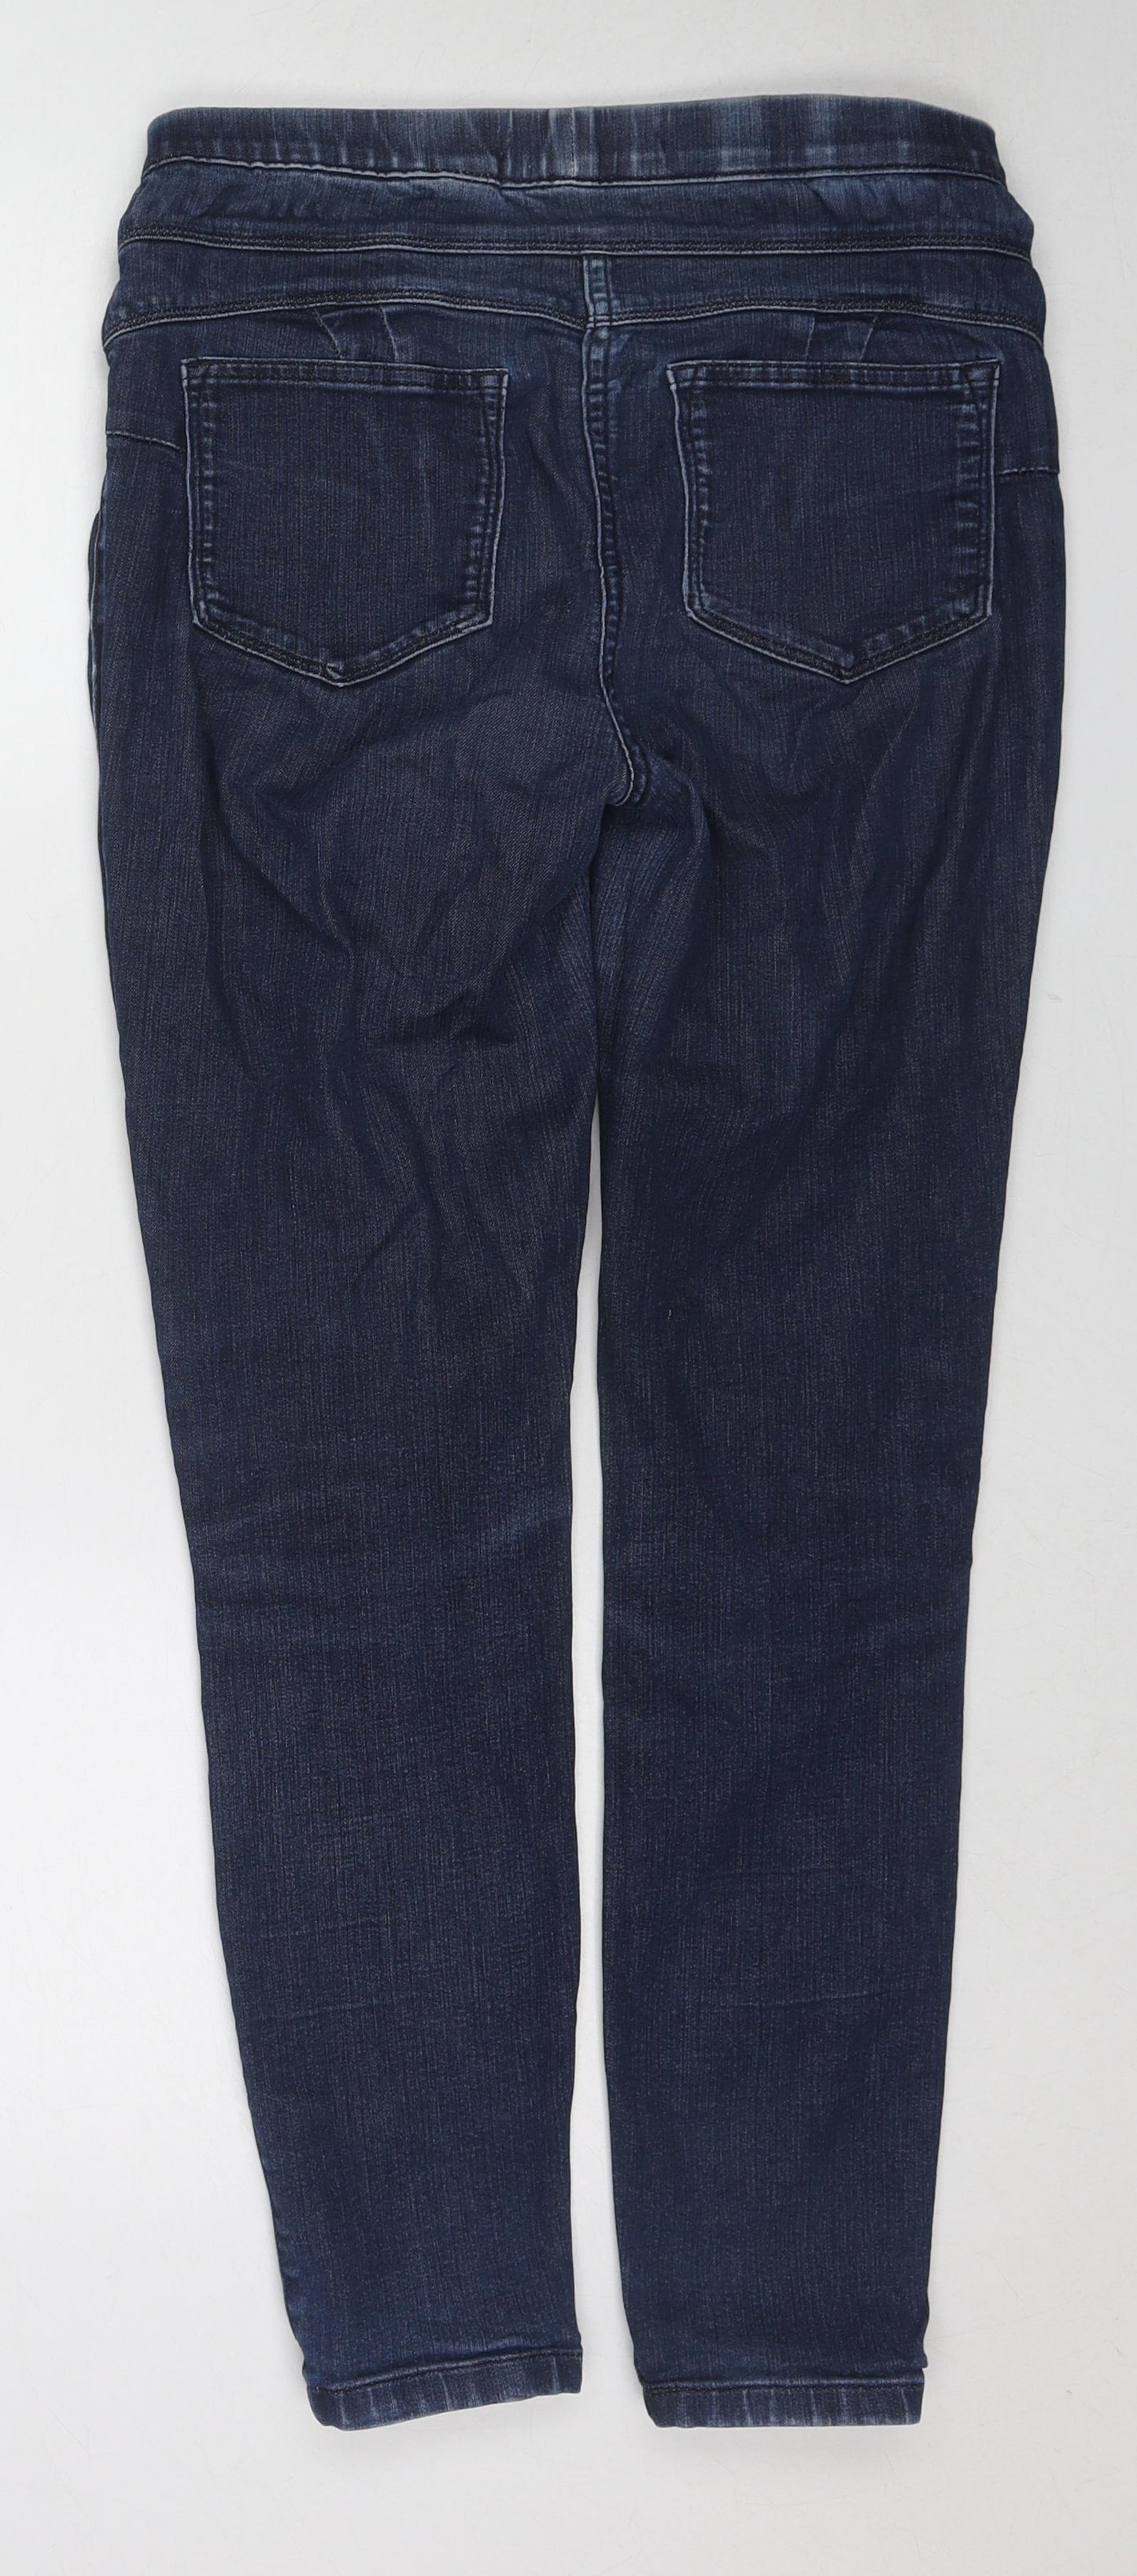 NEXT Womens Blue Cotton Jegging Jeans Size 10 Regular